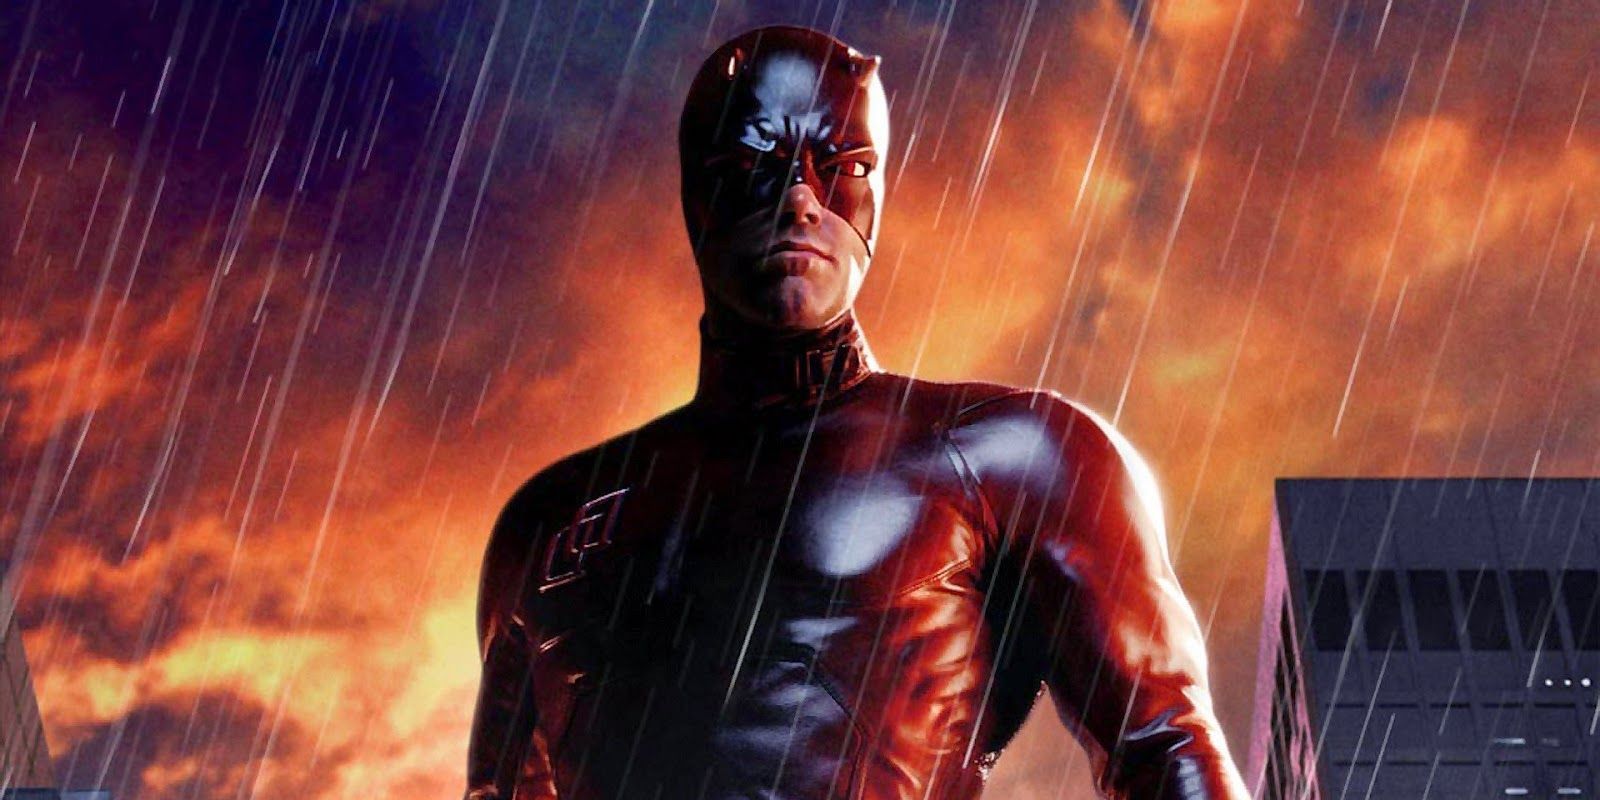 Ben Affleck portrayed Daredevil in the 2003 film.